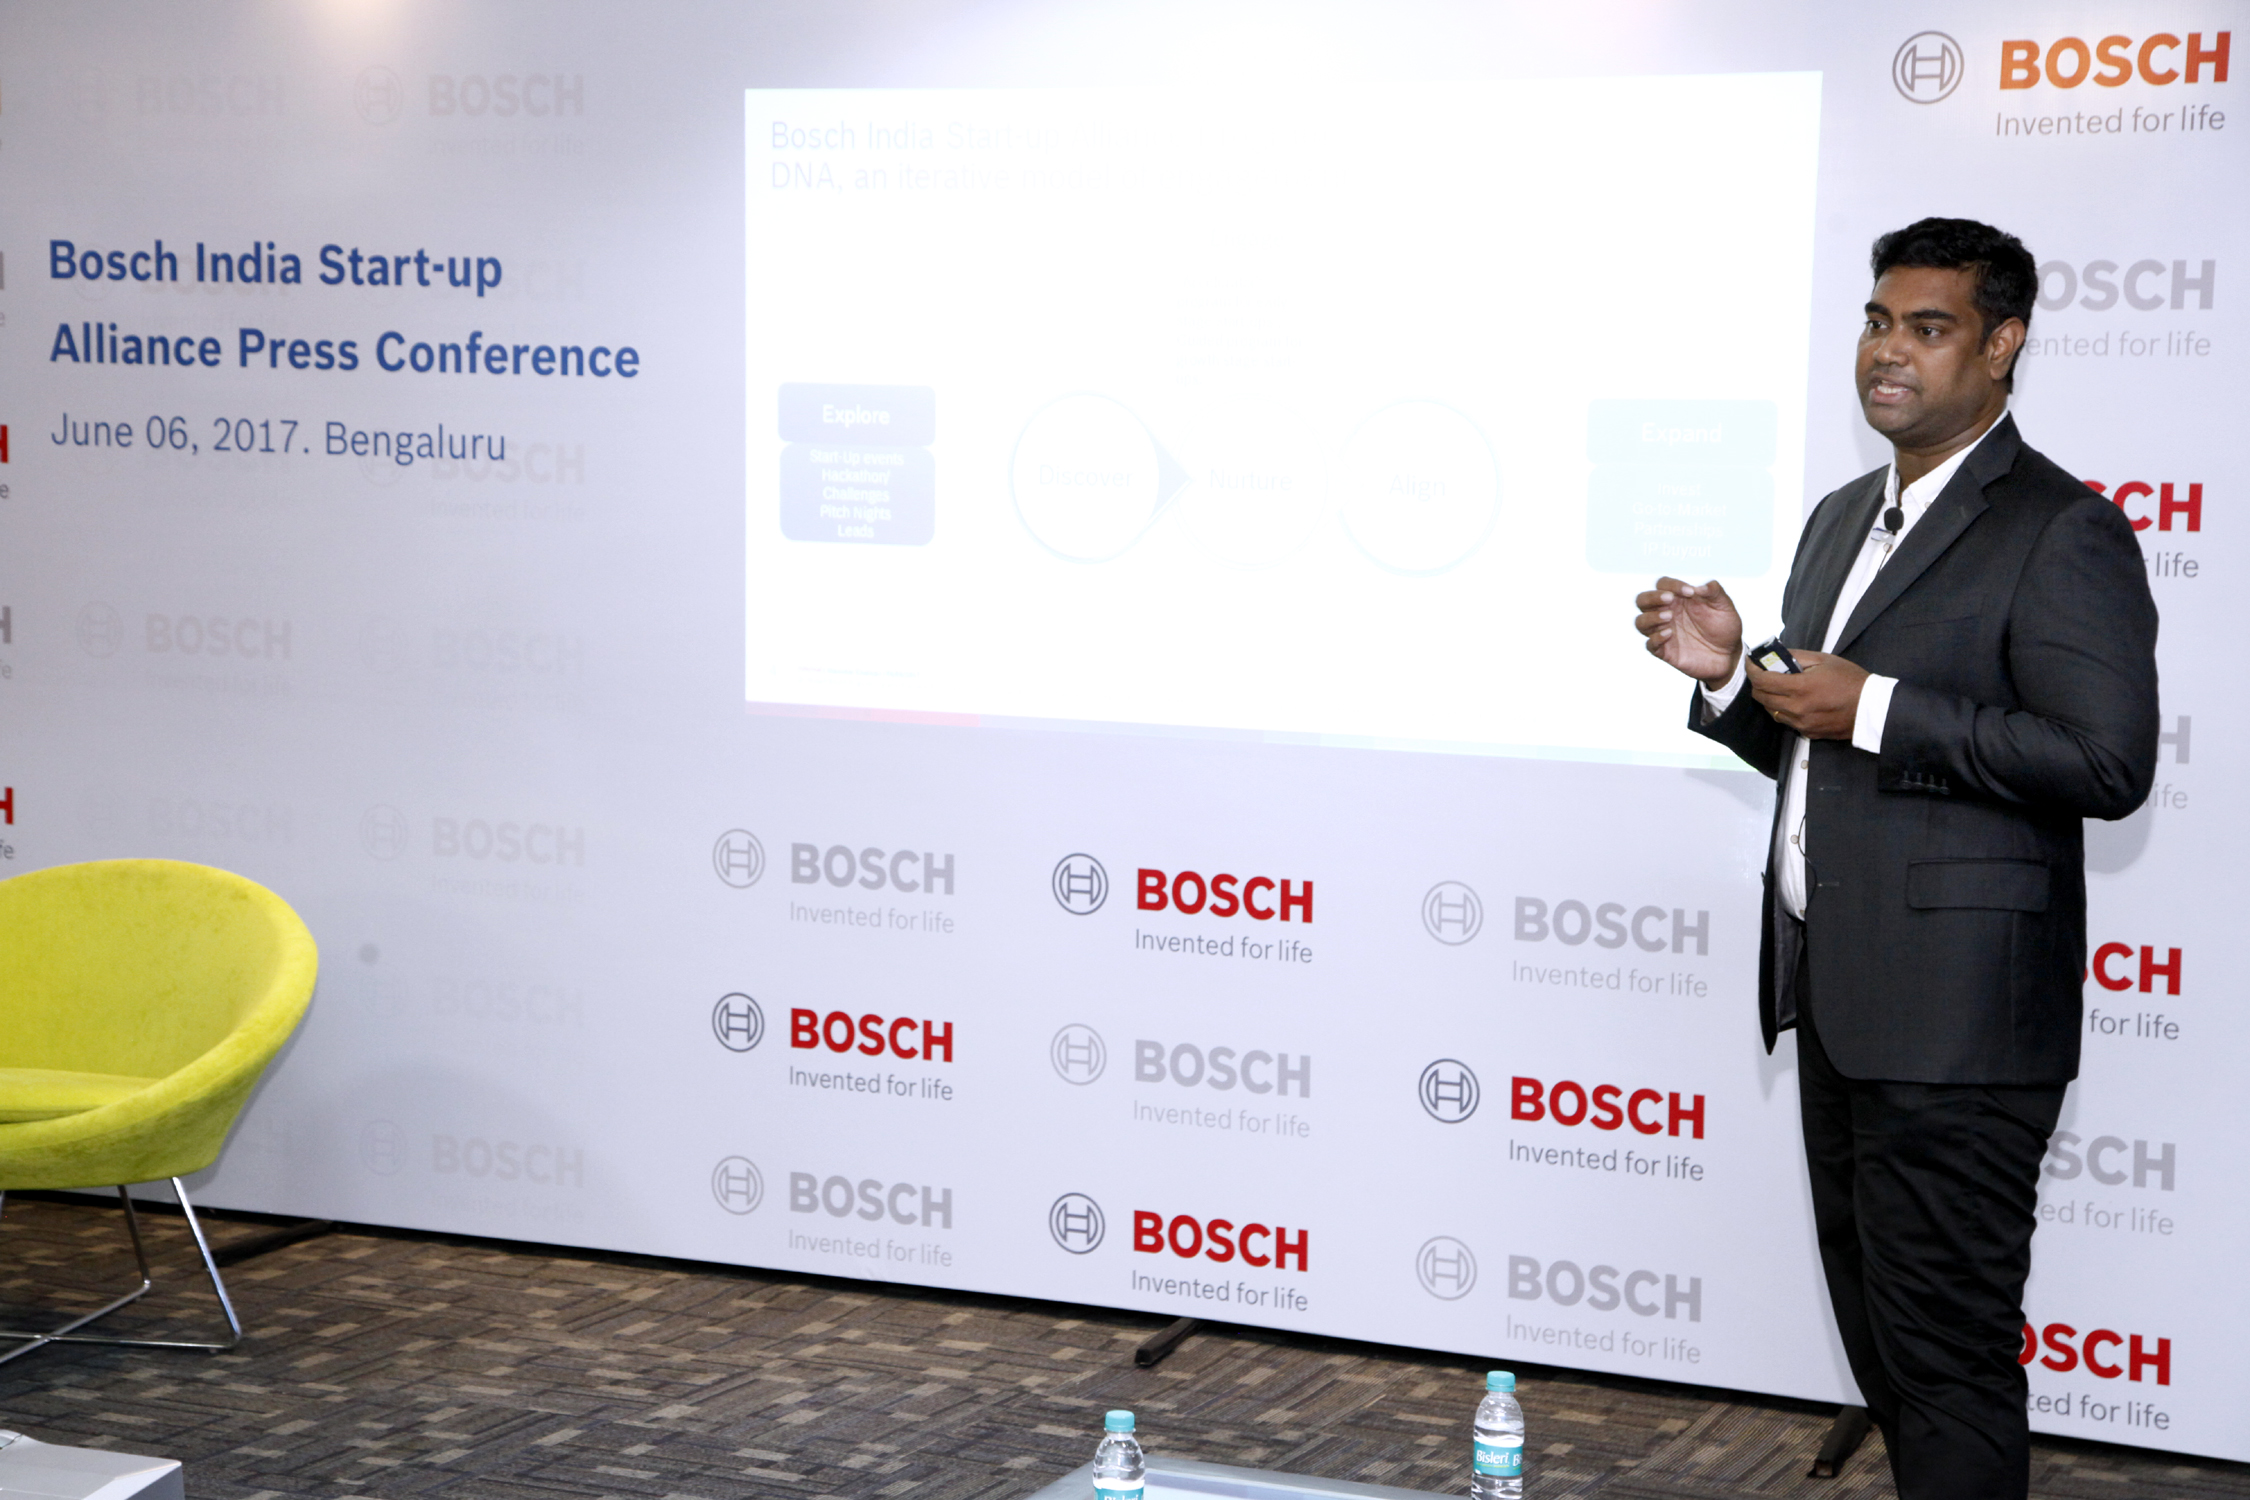 Manohar Esarapu, Leiter des Corporate Venture Program D.N.A. bei Bosch in Indien